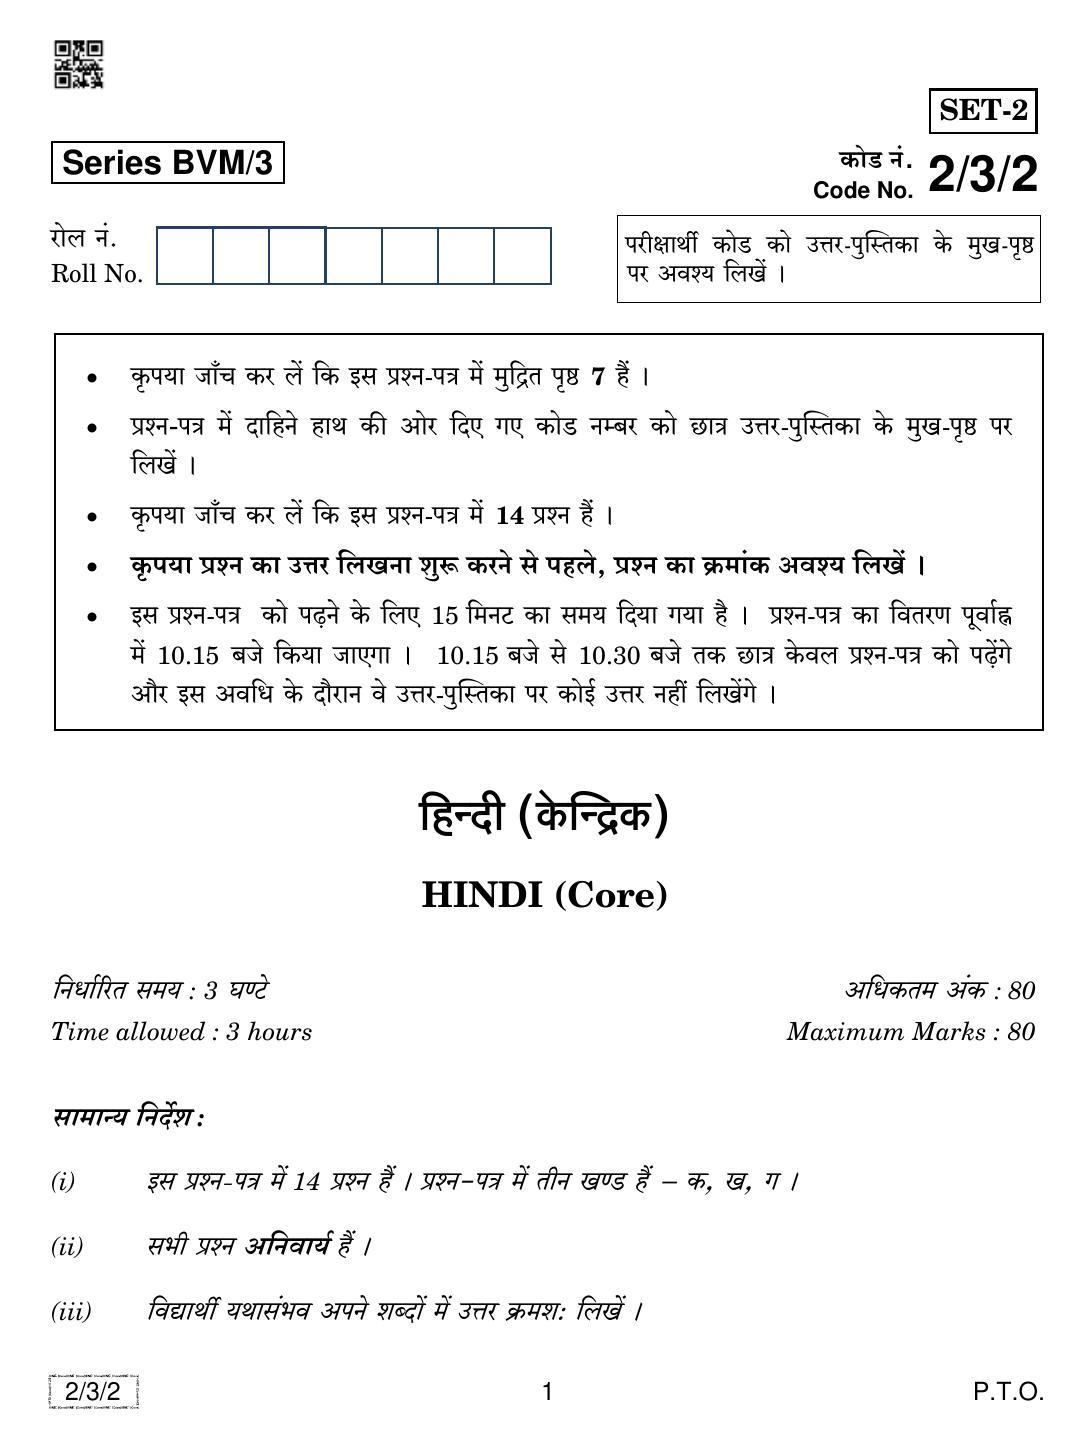 CBSE Class 12 2-3-2 Hindi Core 2019 Question Paper - Page 1